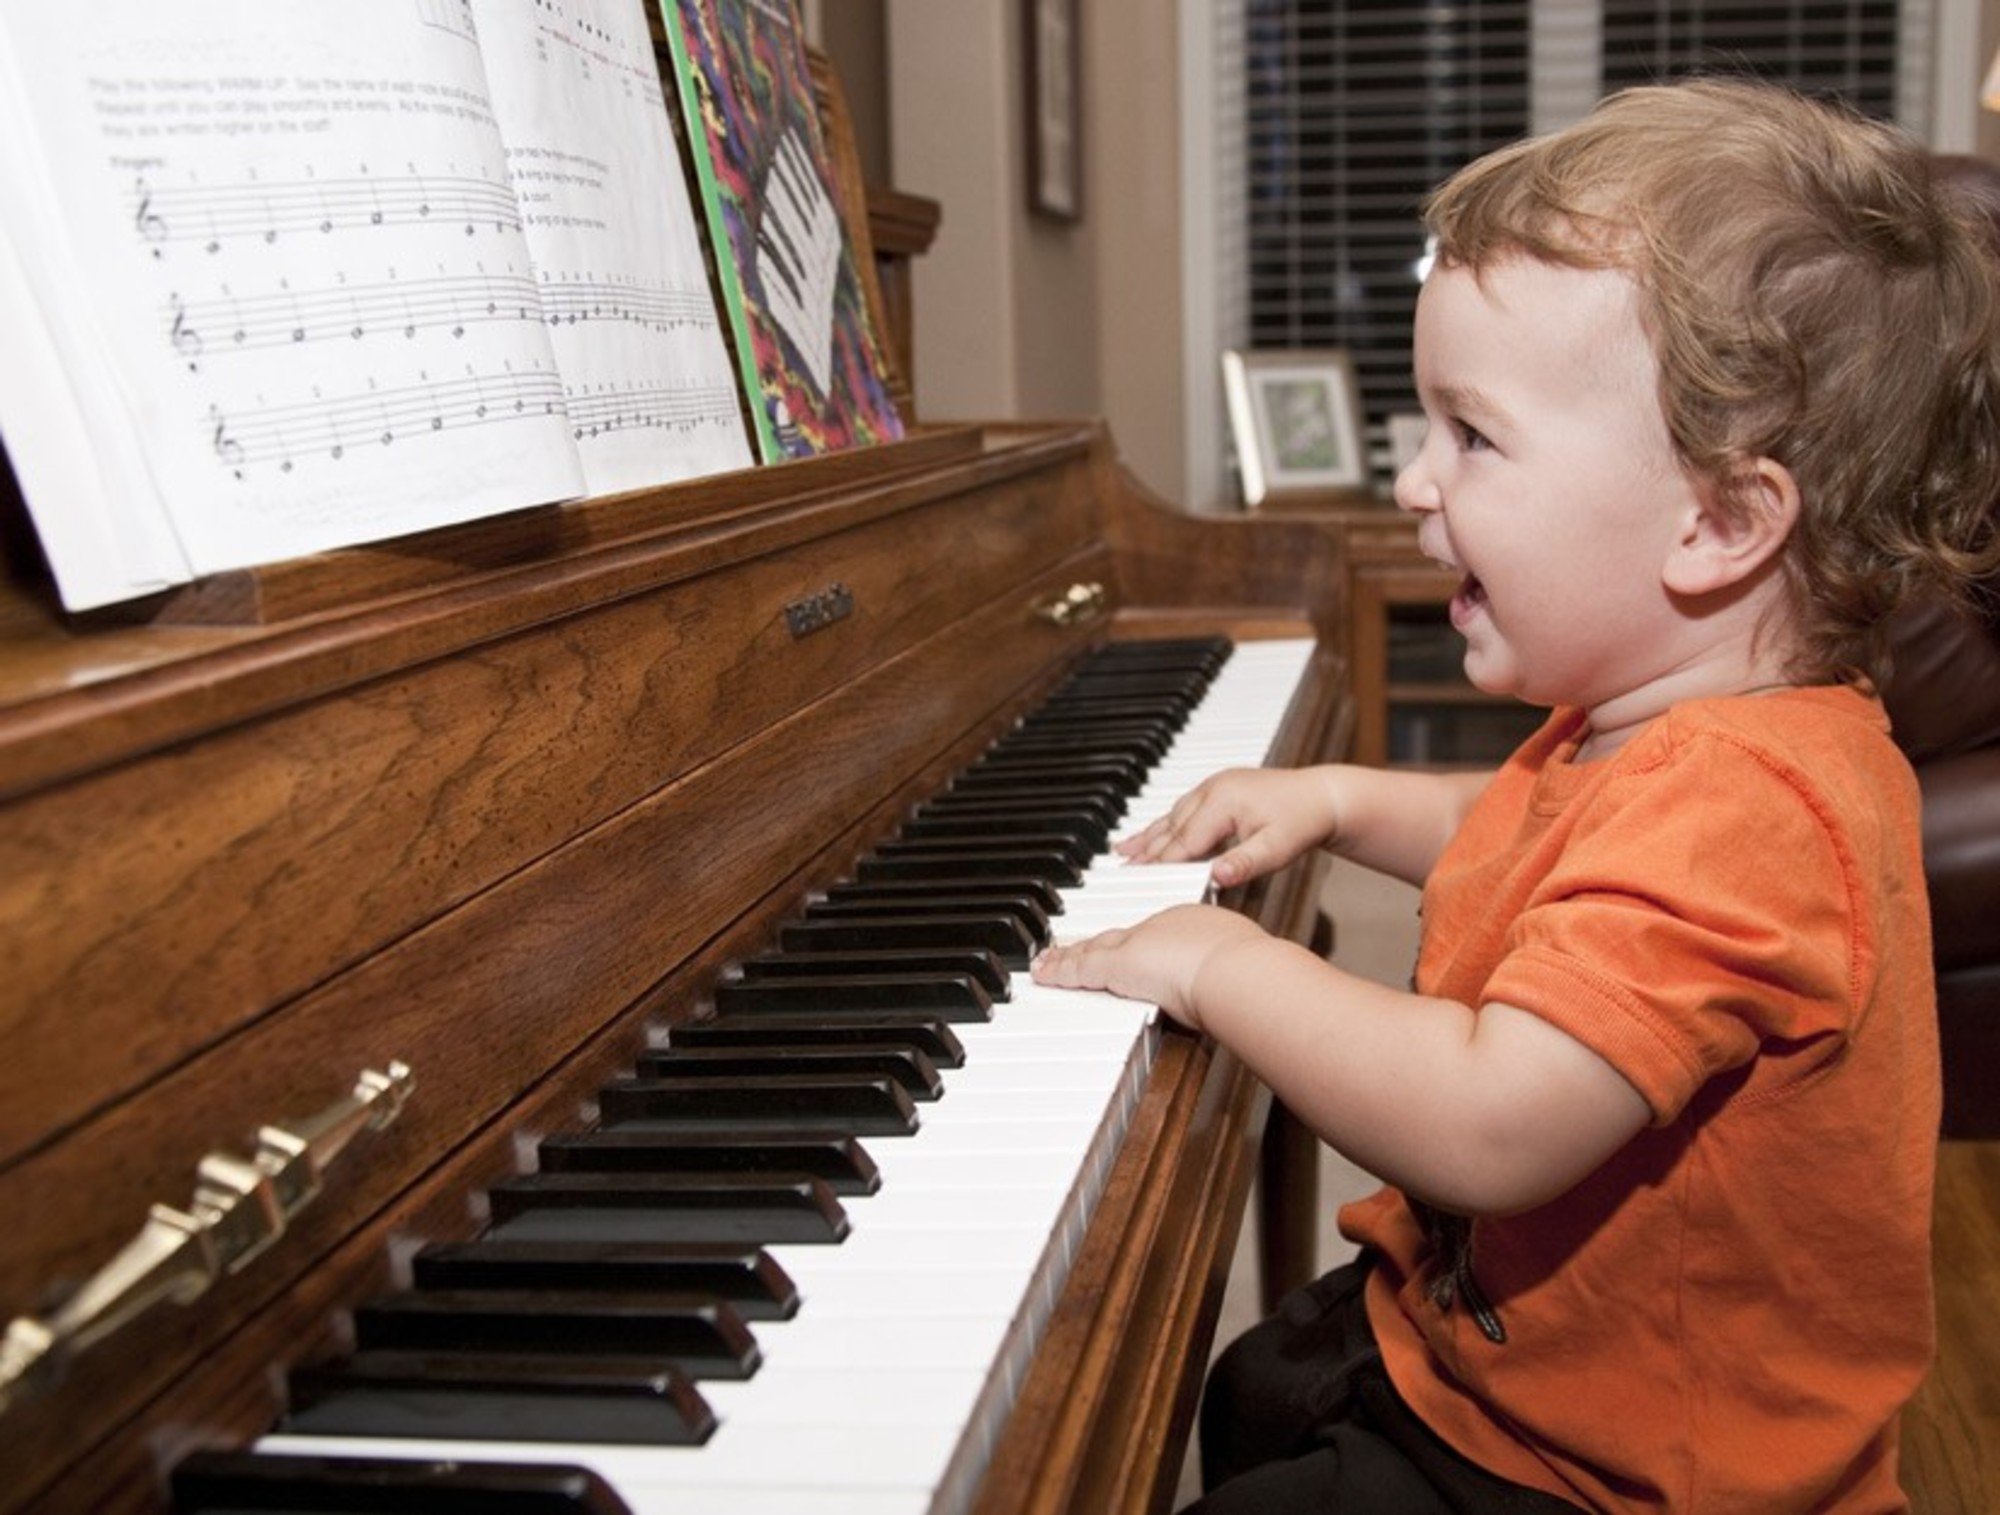 Does he play the piano. Фортепиано для детей. Пианино для детей. Музыкальные инструменты для детей. Пианино в детском саду.